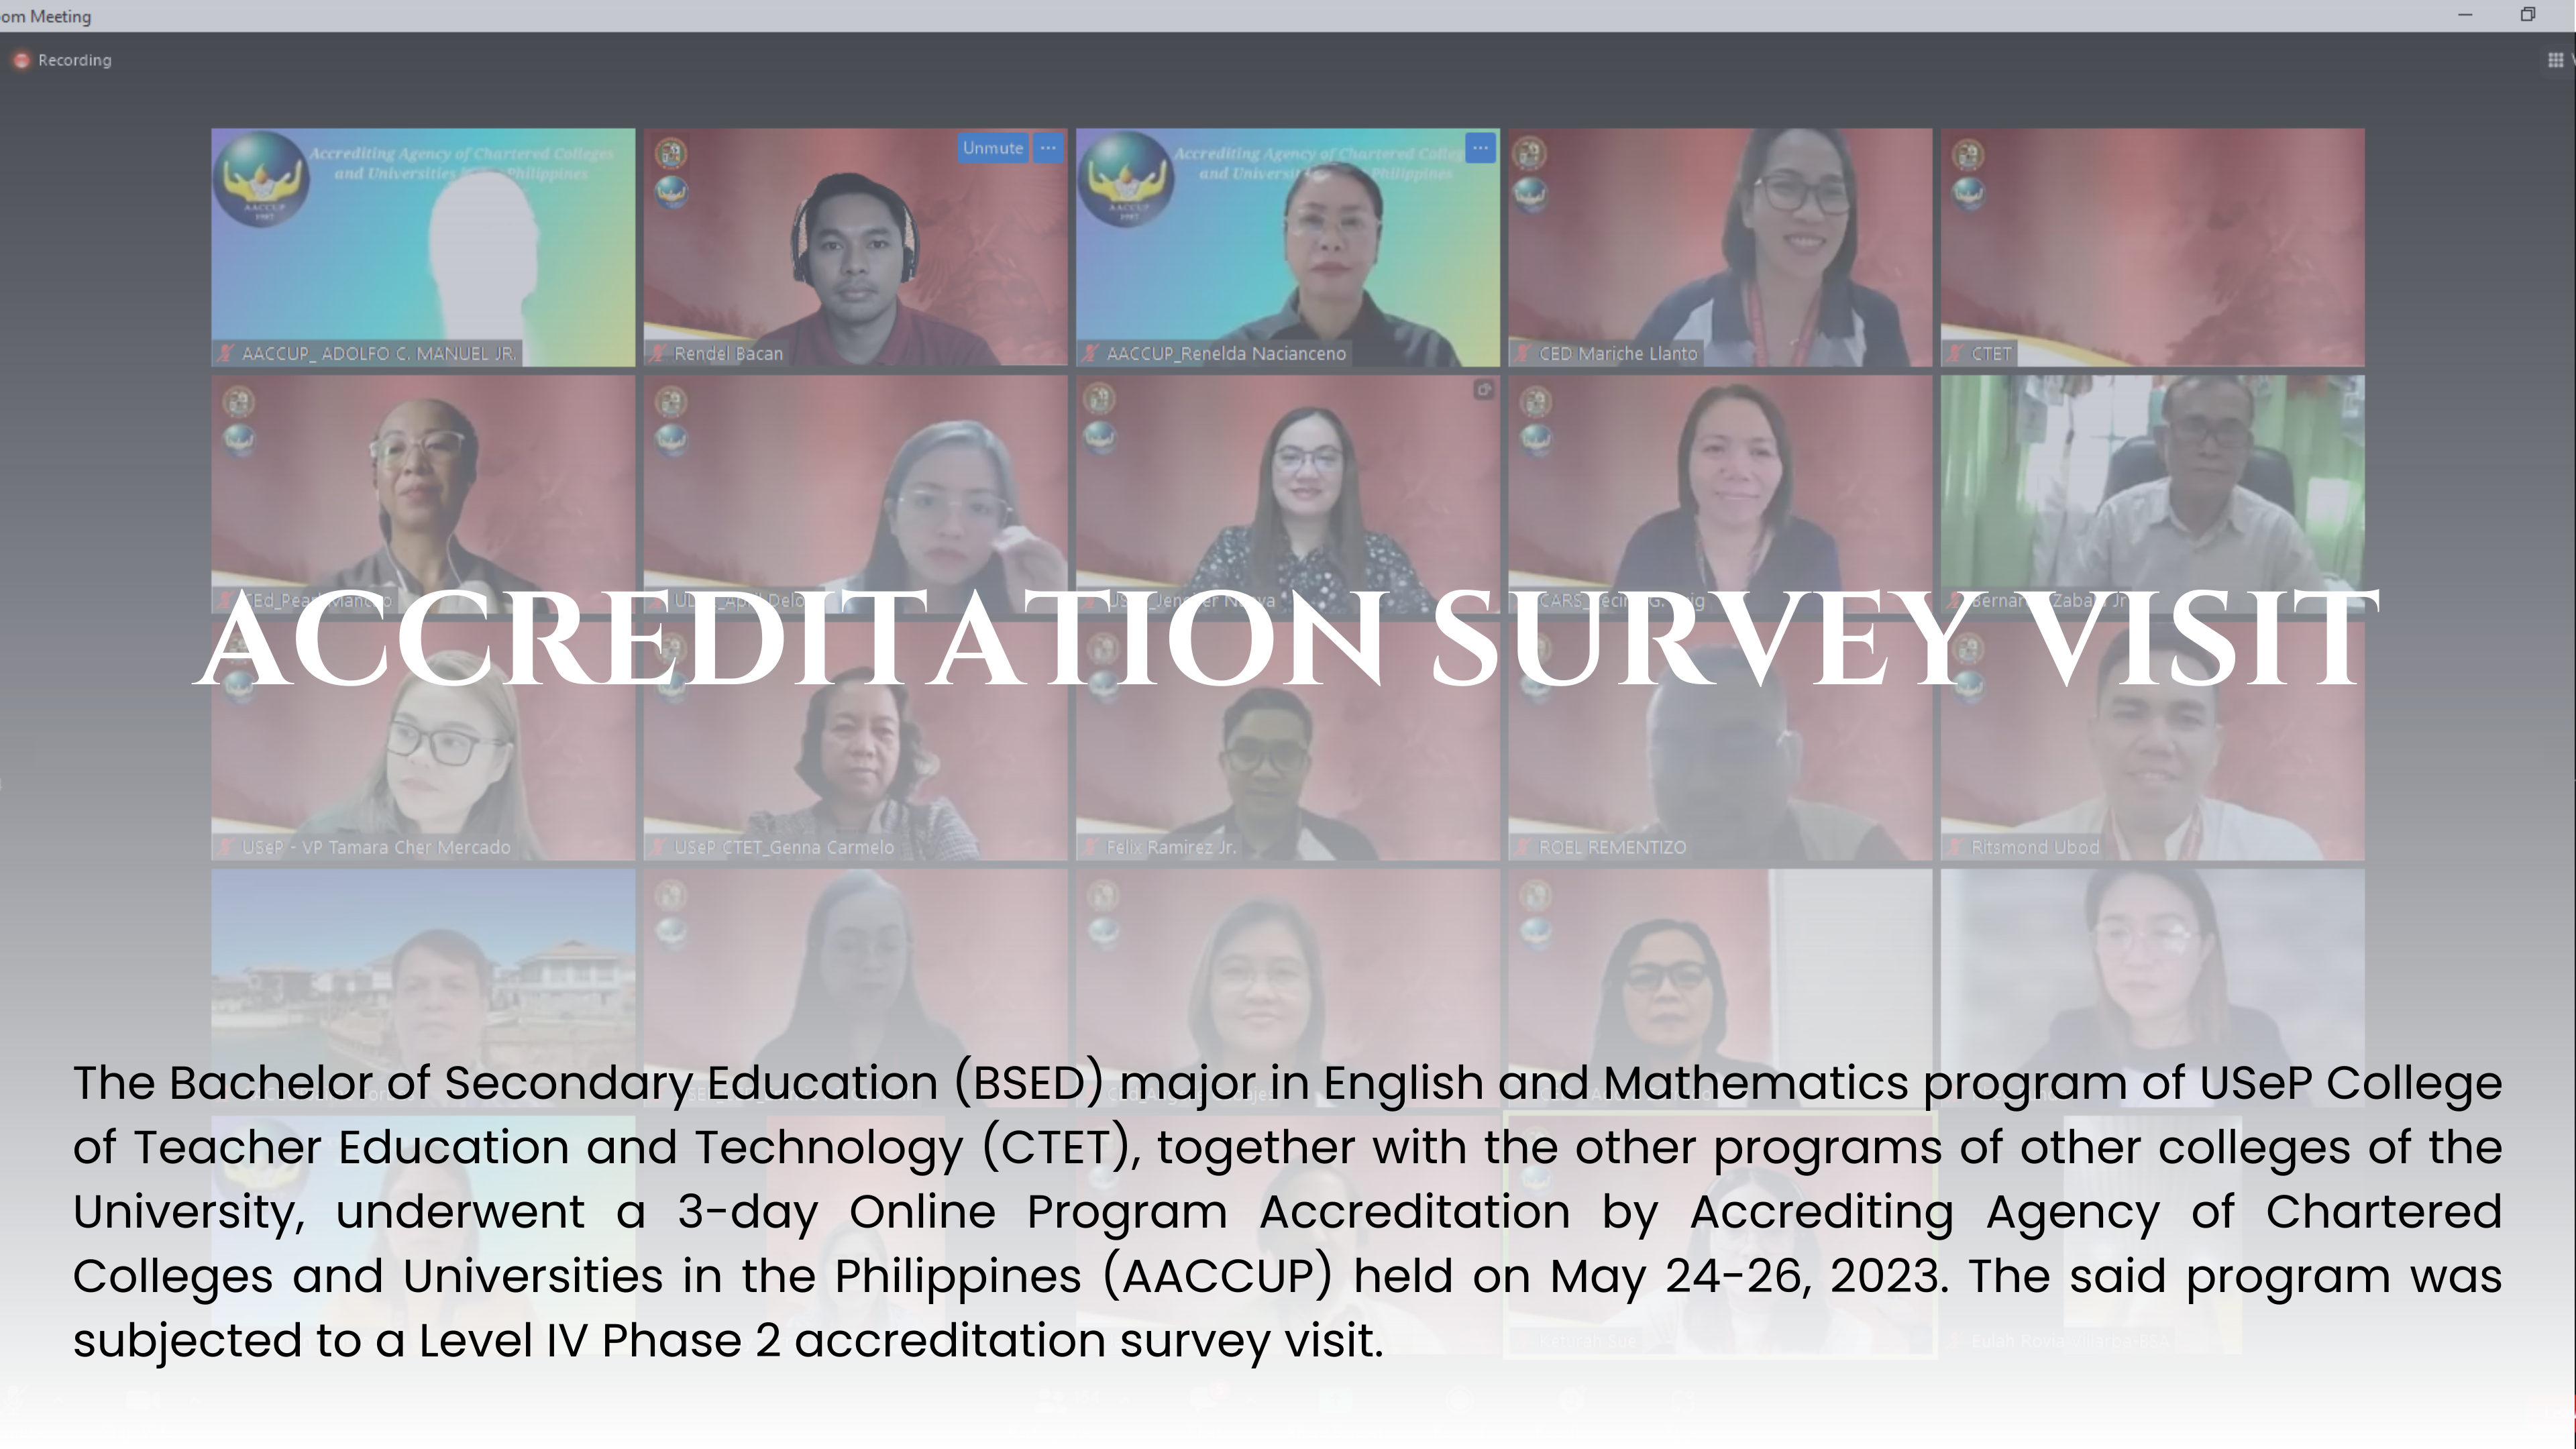 CTET BSED Program underwent an Online Accreditation Survey Visit